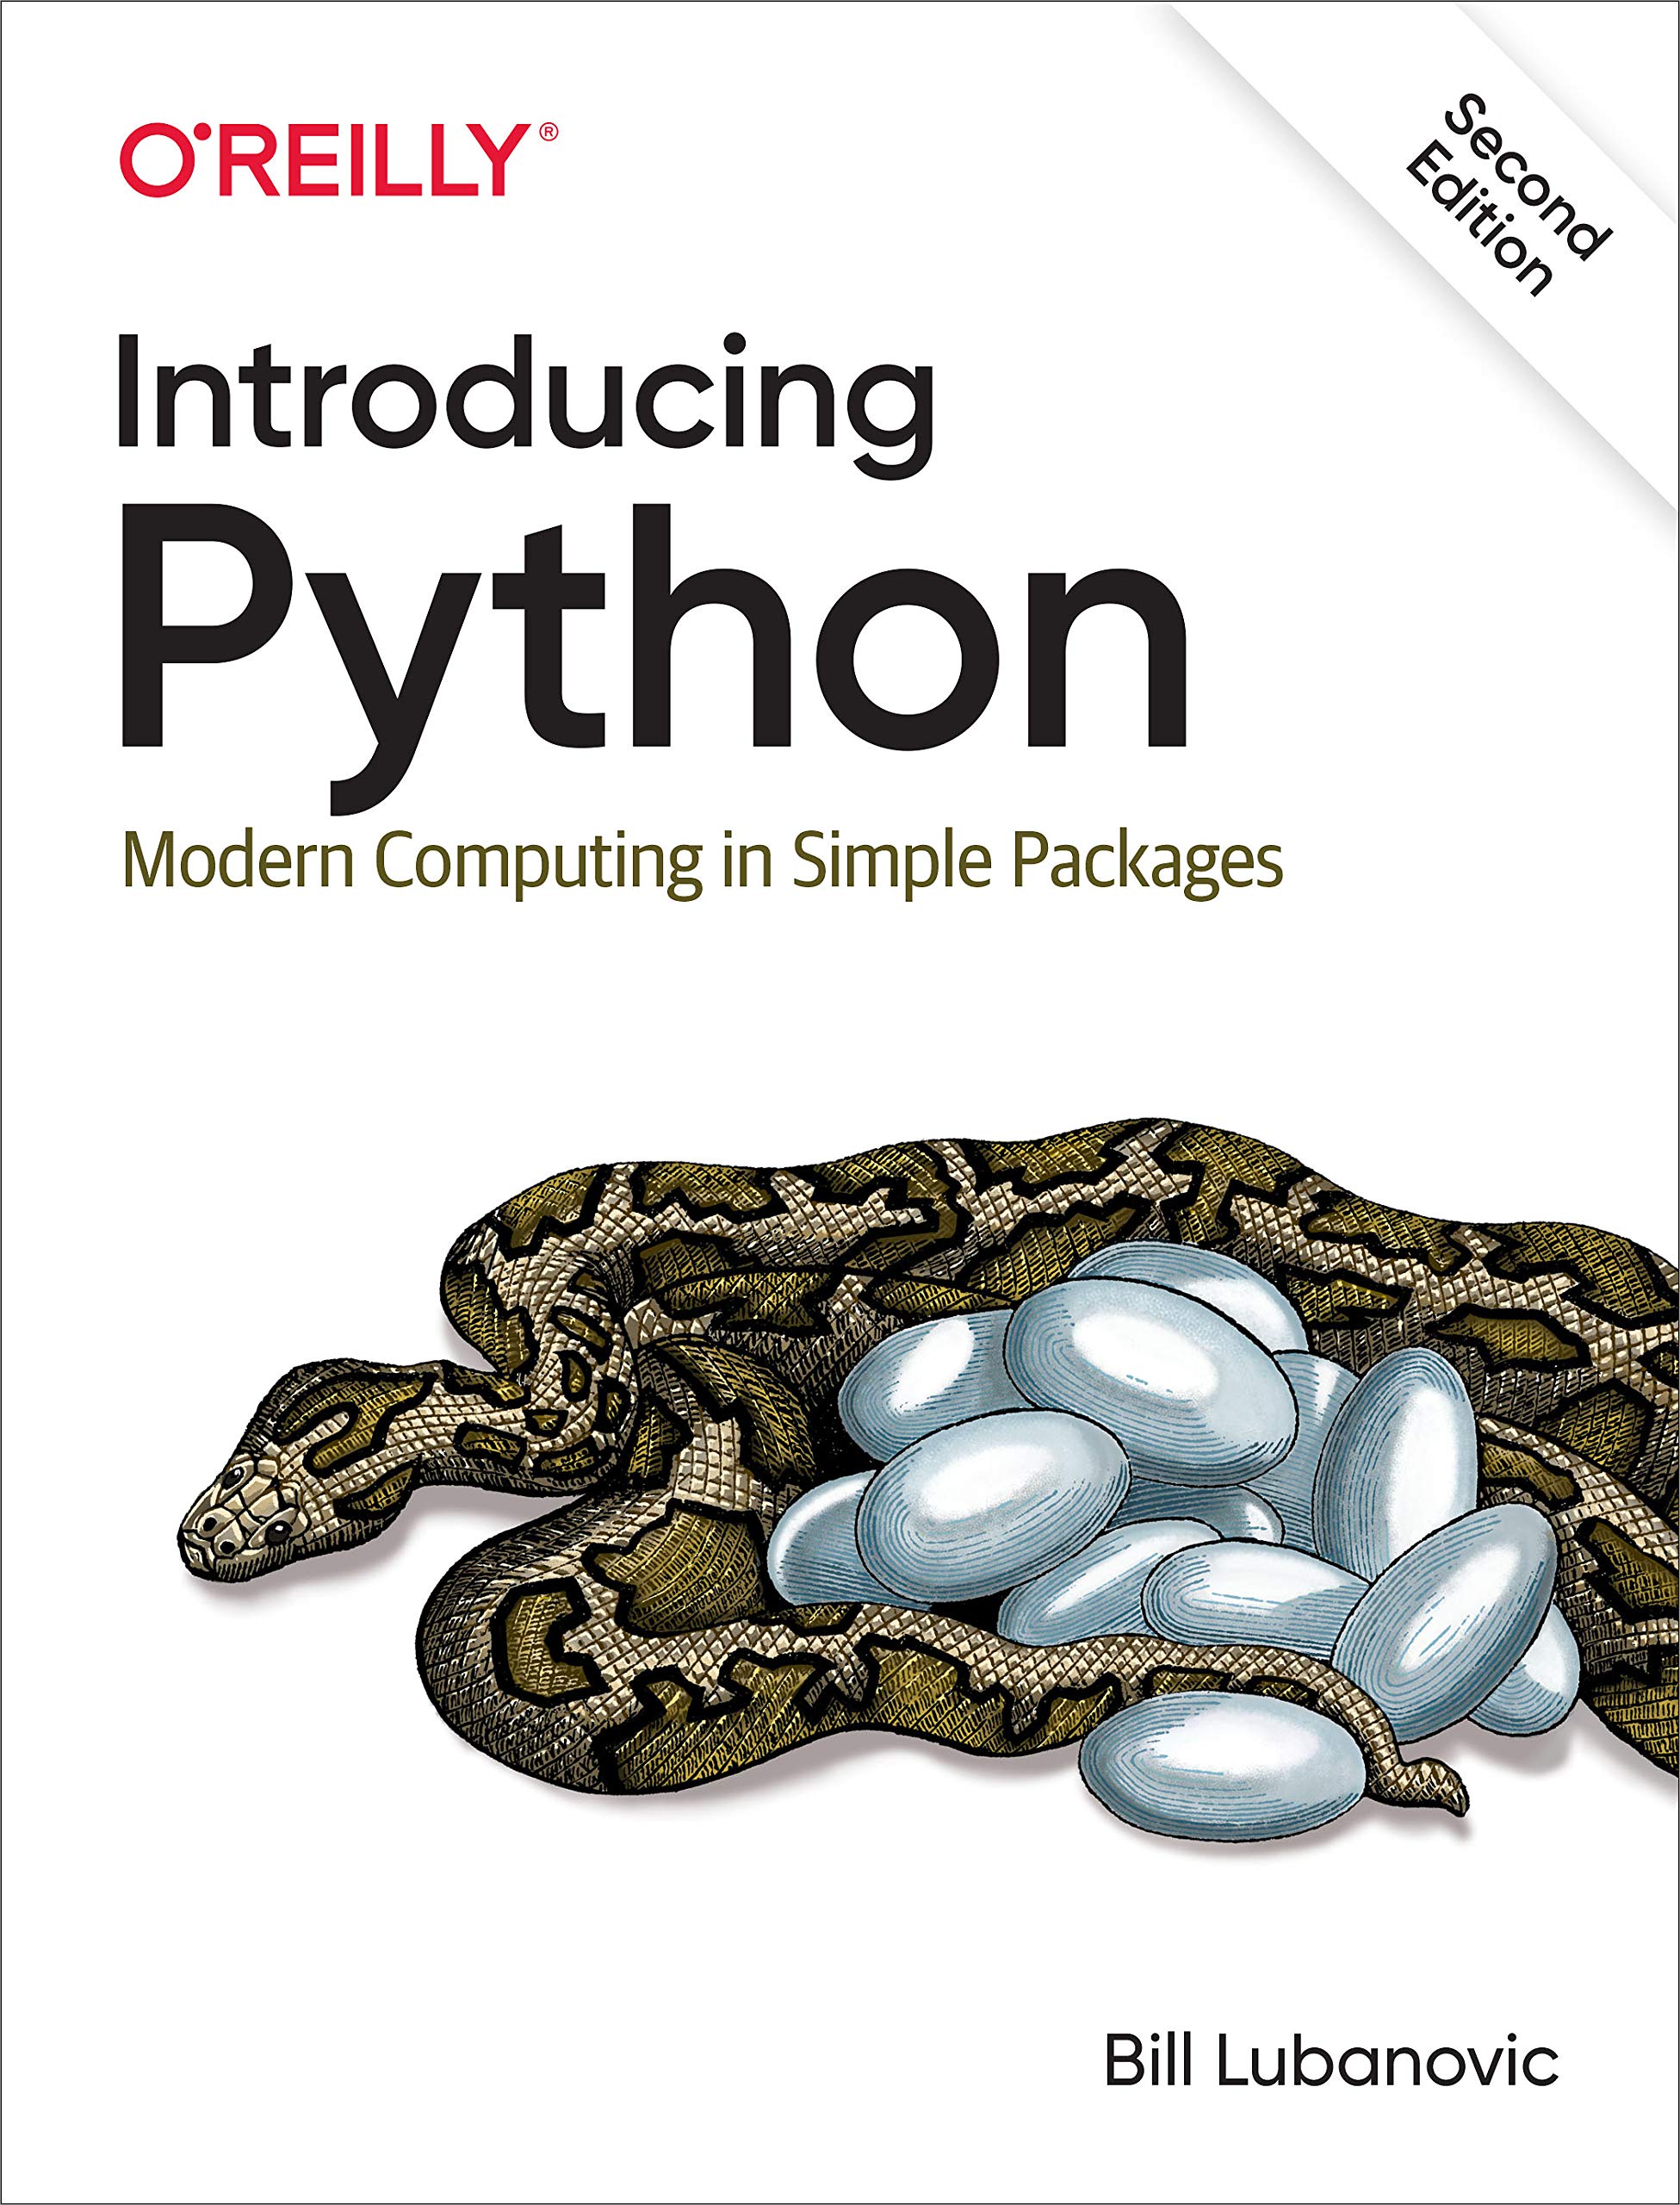 Introducing Python : Modern Computing in Simple Packages (2nd) [Paperback]by Lubanovic, Bill (ใหม่) หนังสือภาษาอังกฤษพร้อมส่ง